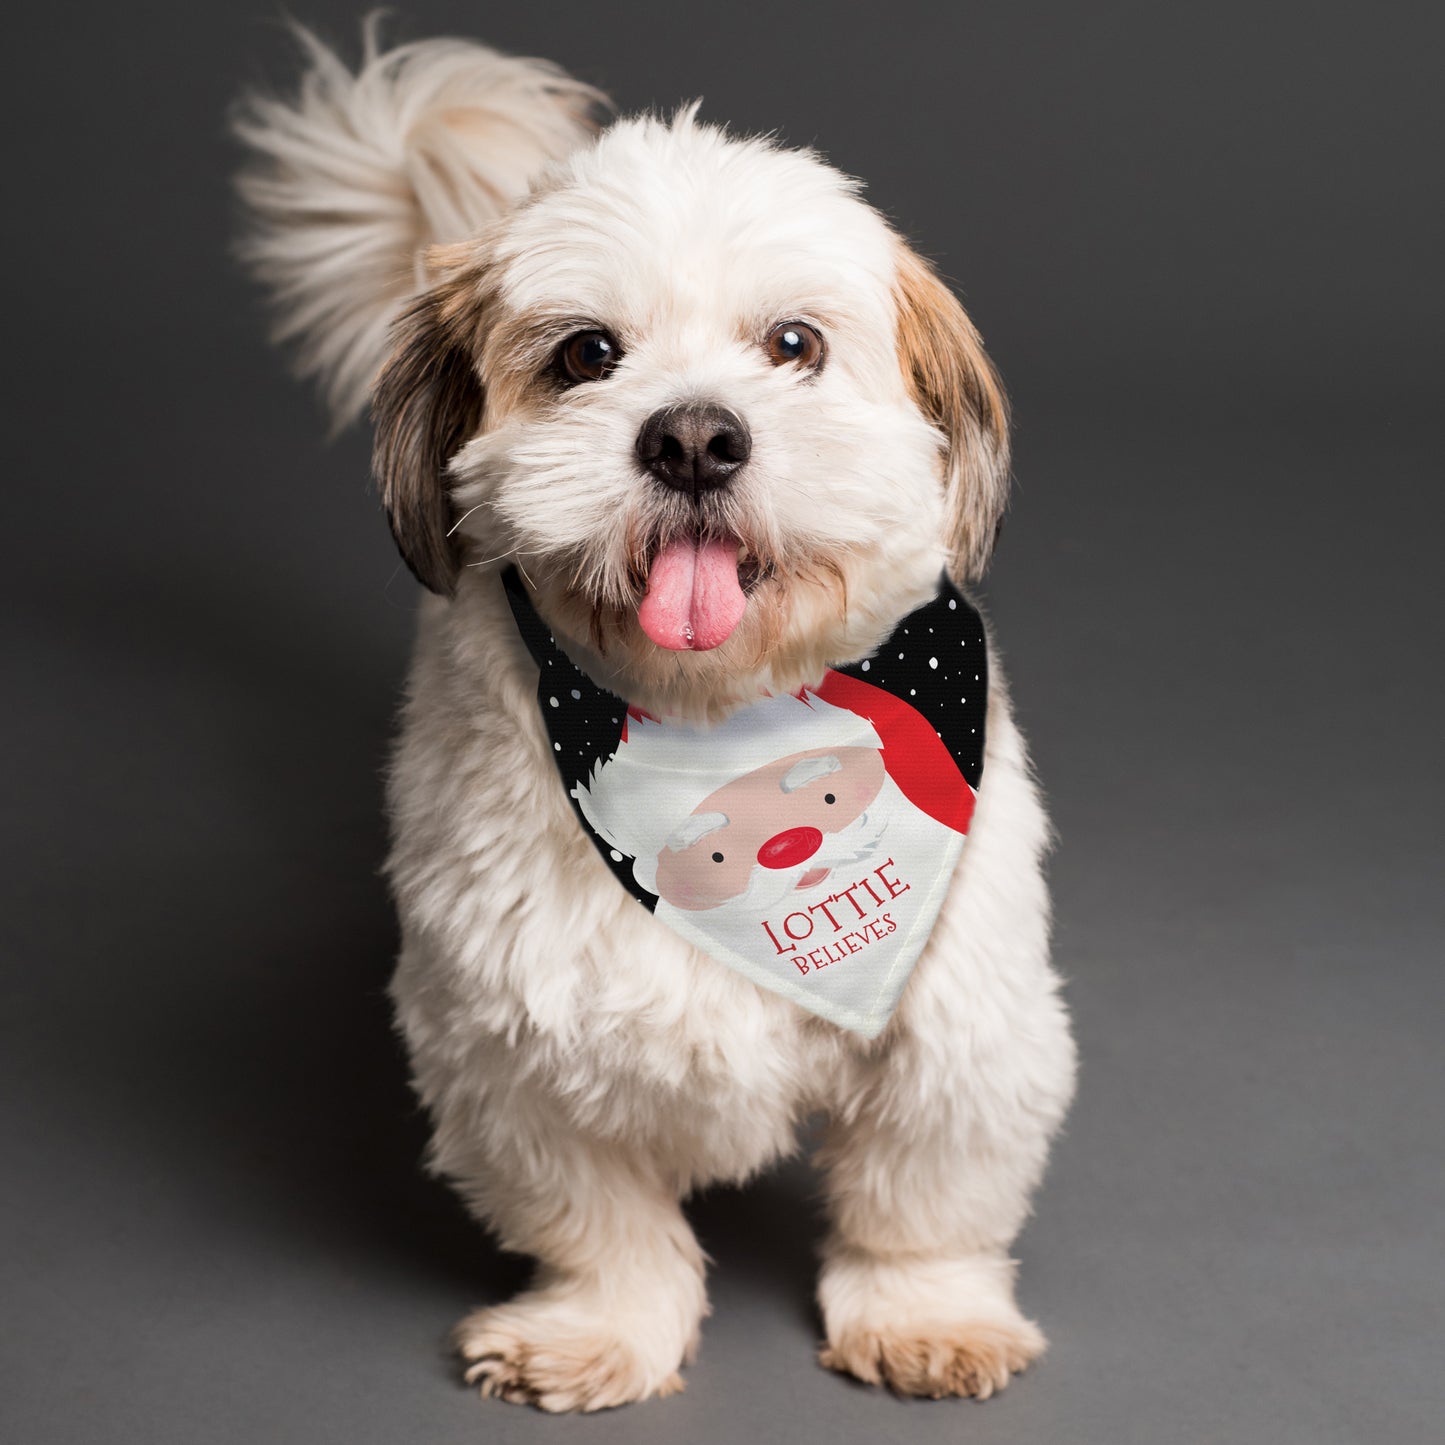 Santa dog bandana, personalised - Lilybet loves